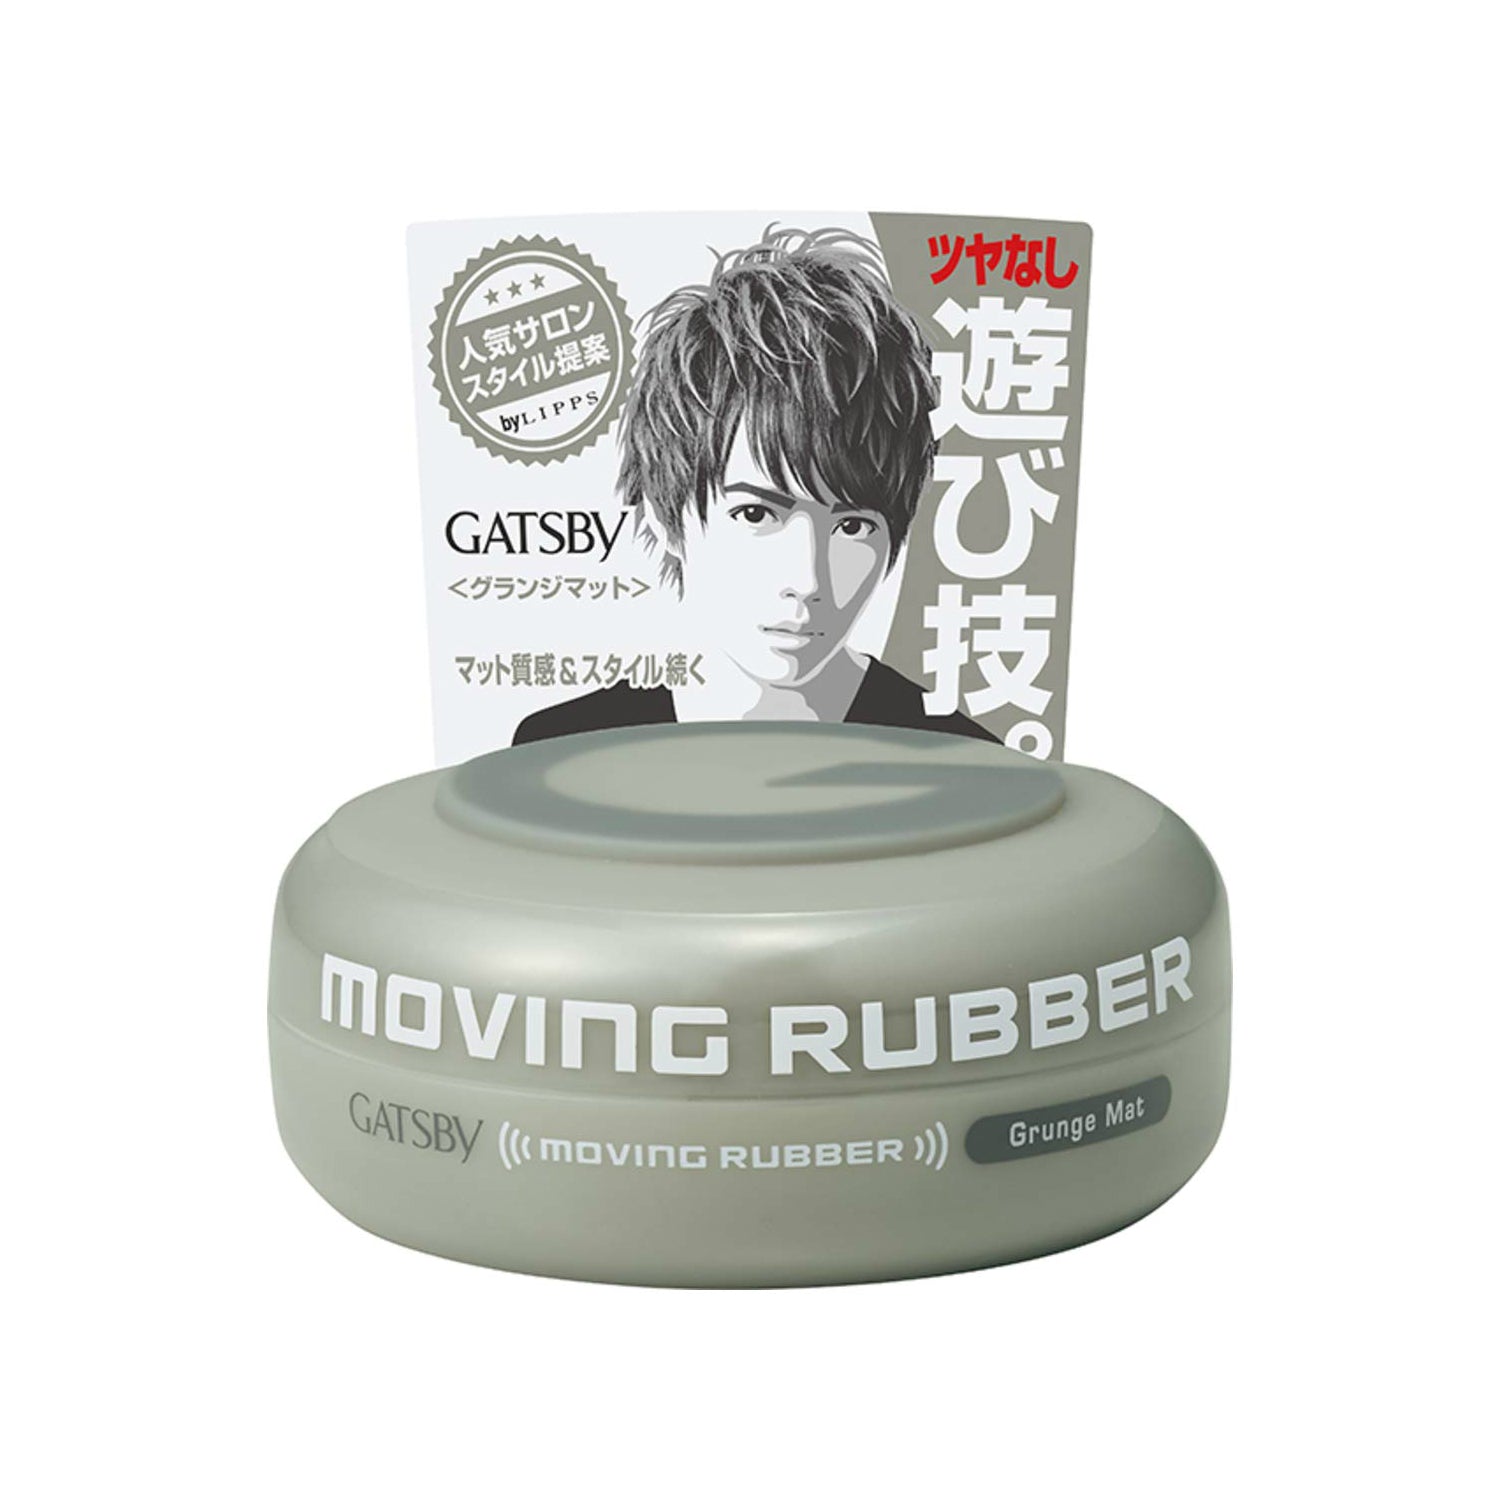 Gatsby Moving Rubber Extreme Mat Beauty Mandom   